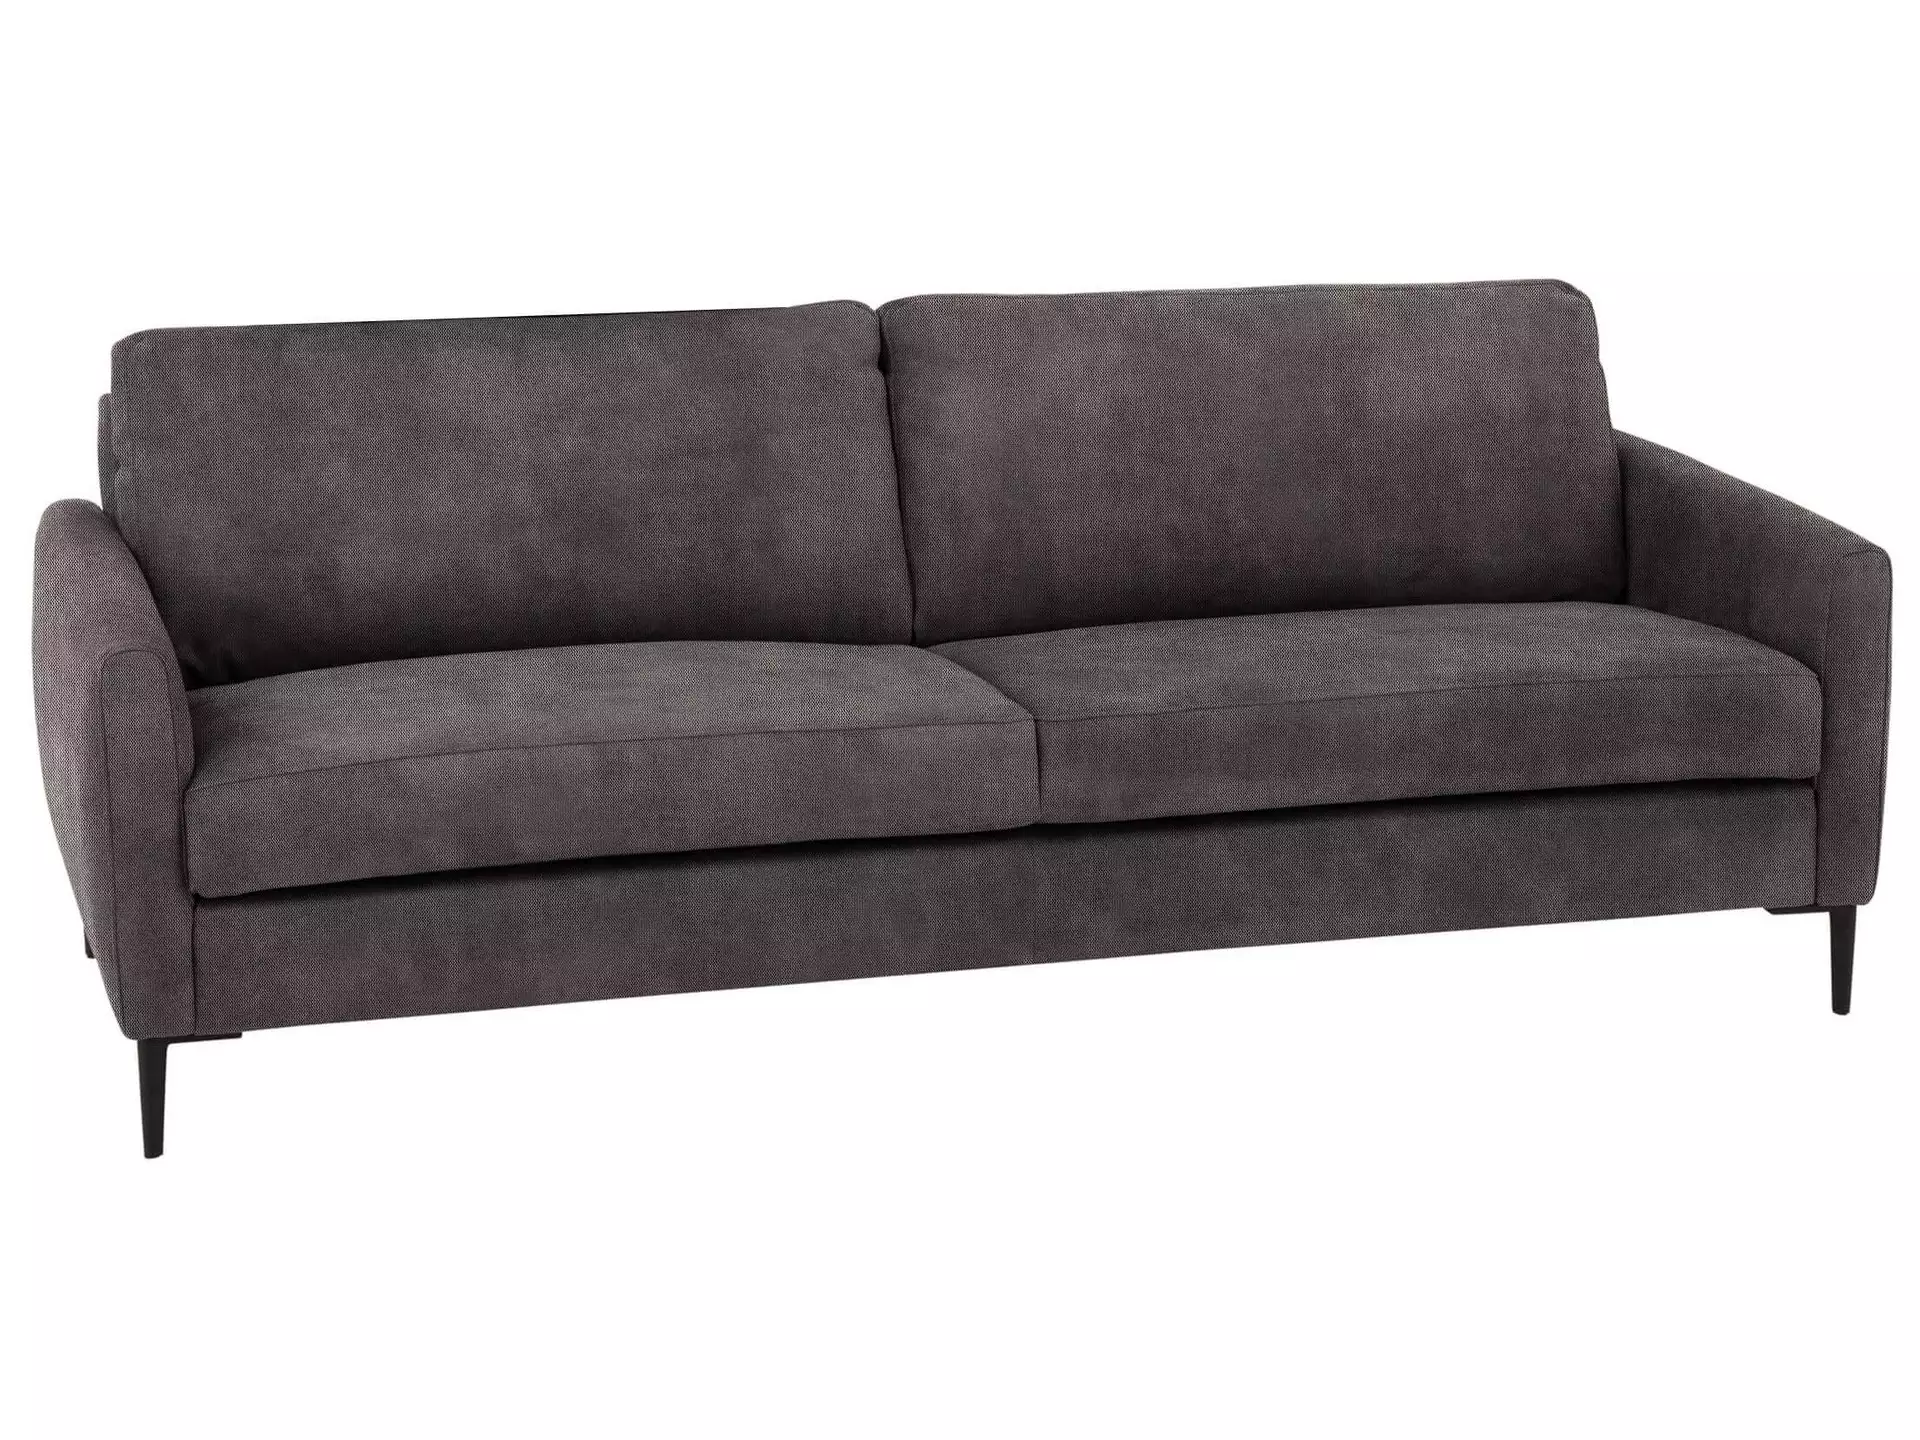 Sofa Antonio Basic B: 196 cm Schillig Willi / Farbe: Grey / Material: Stoff Basic